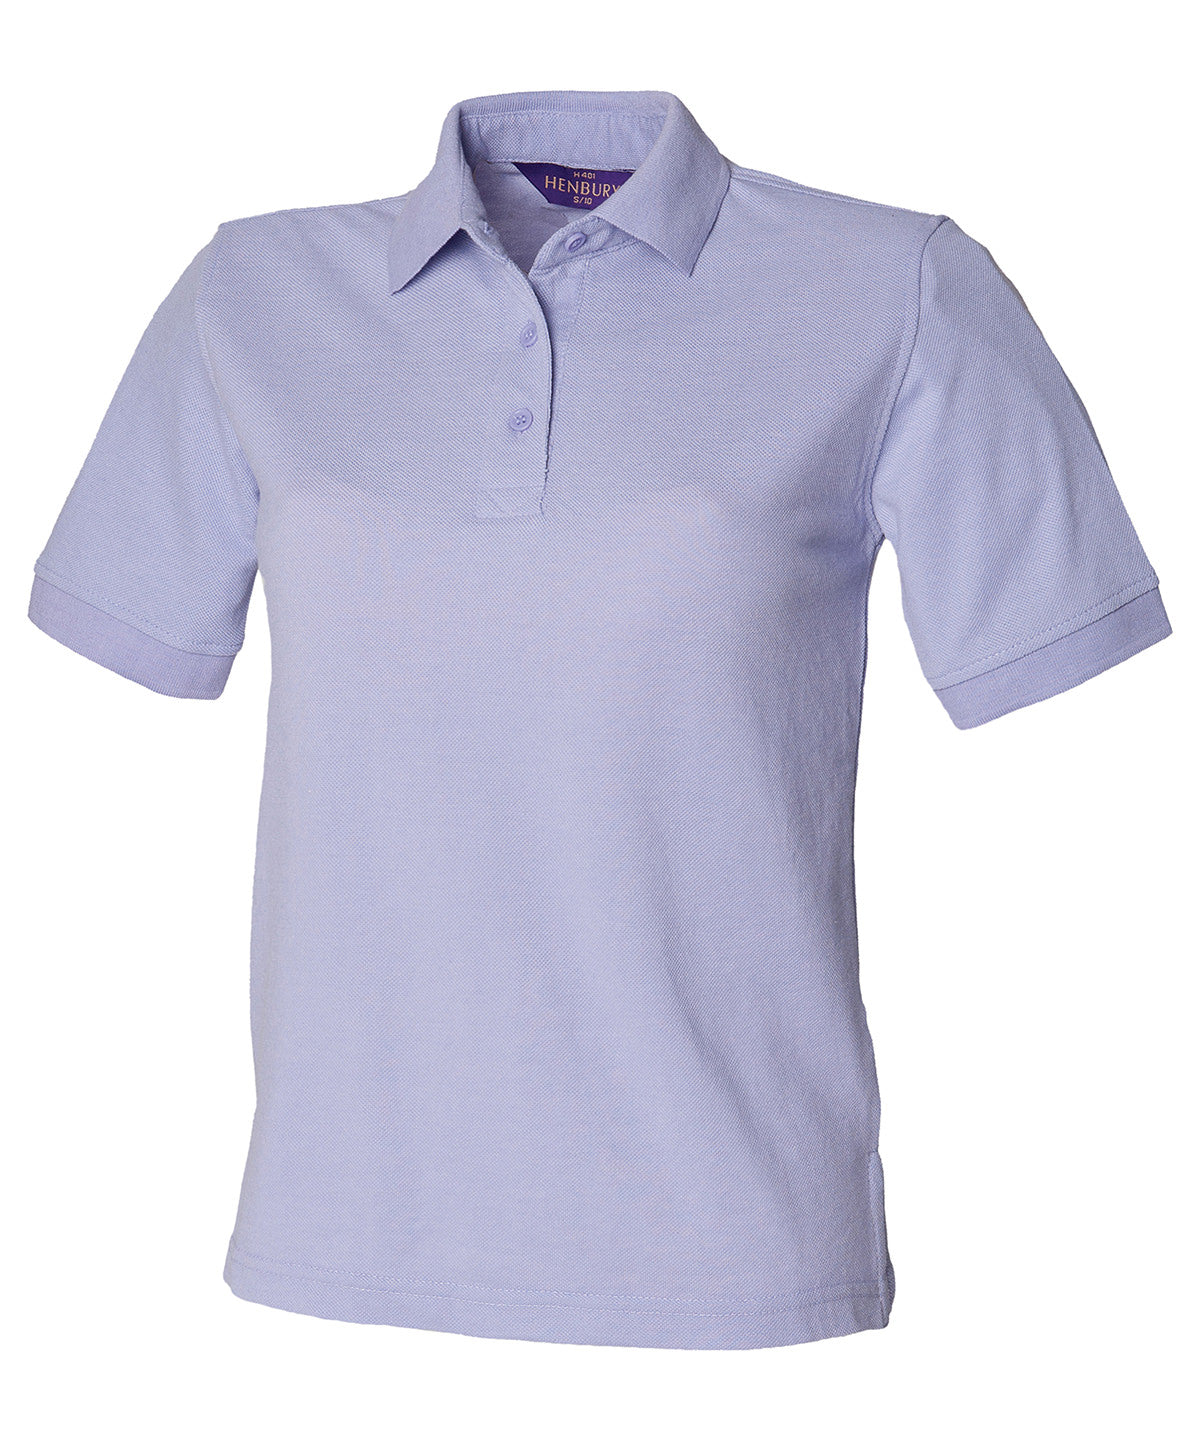 Personalised Polo Shirts - Black Henbury Women's 65/35 polo shirt